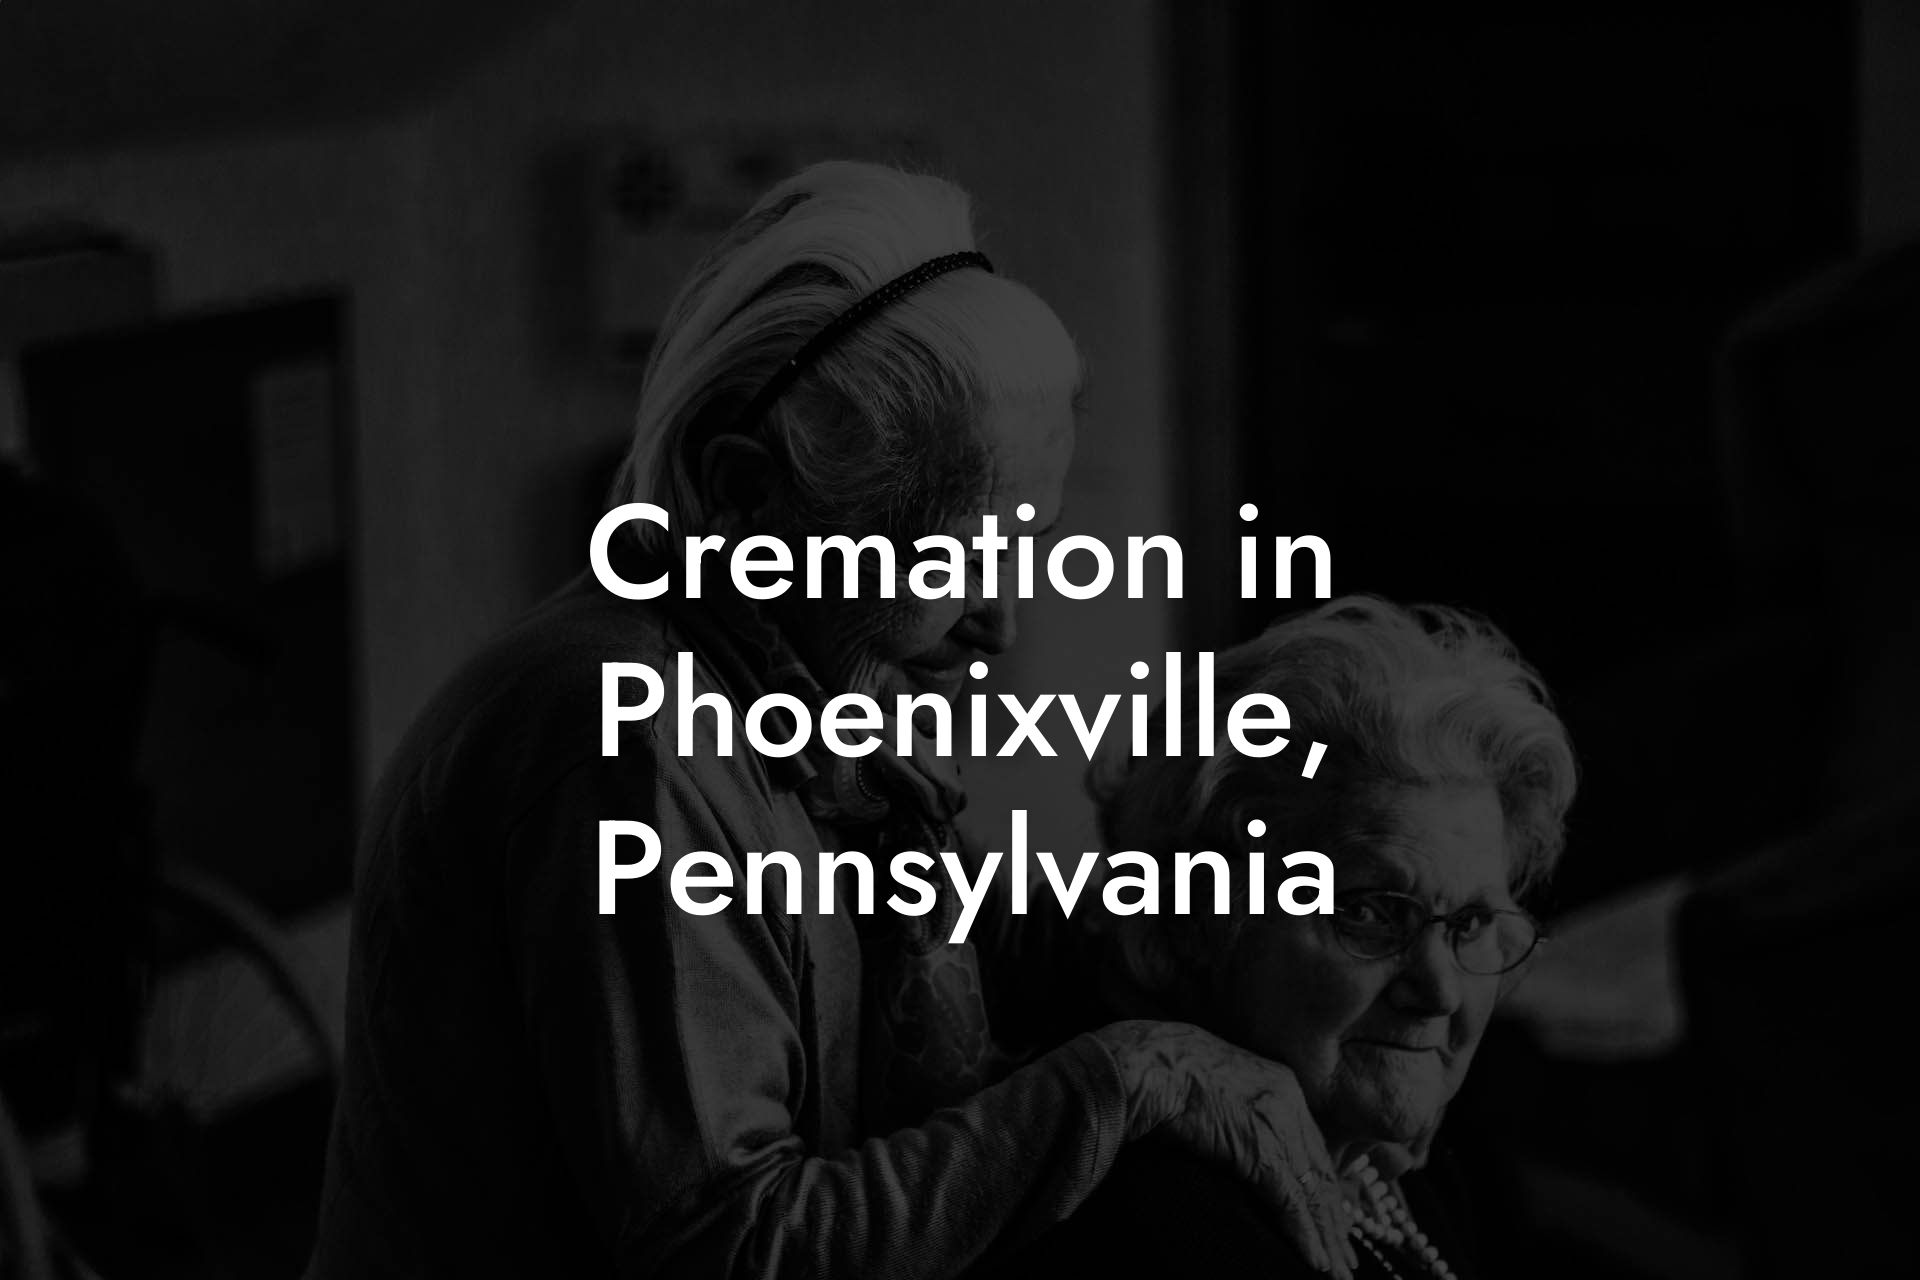 Cremation in Phoenixville, Pennsylvania